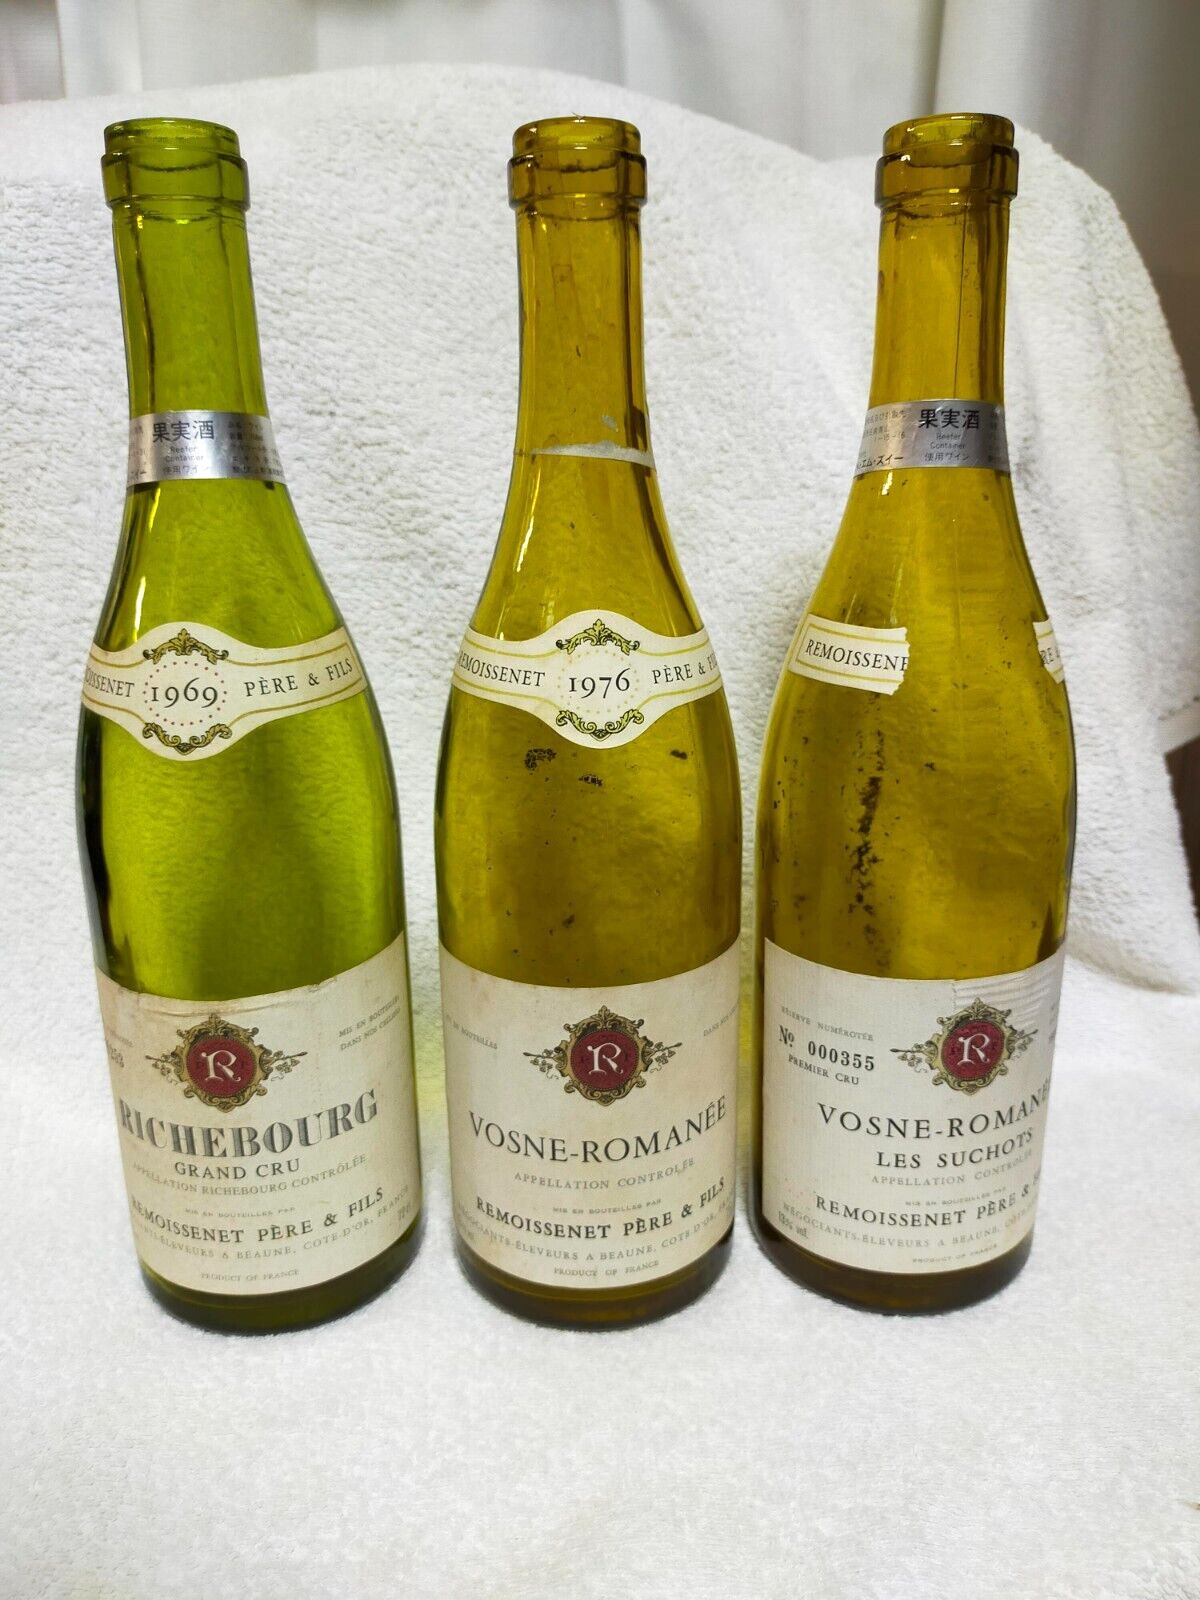 remoissenet pere & fils richebourg vosne romanee Set of 3 glass bottles (empty)